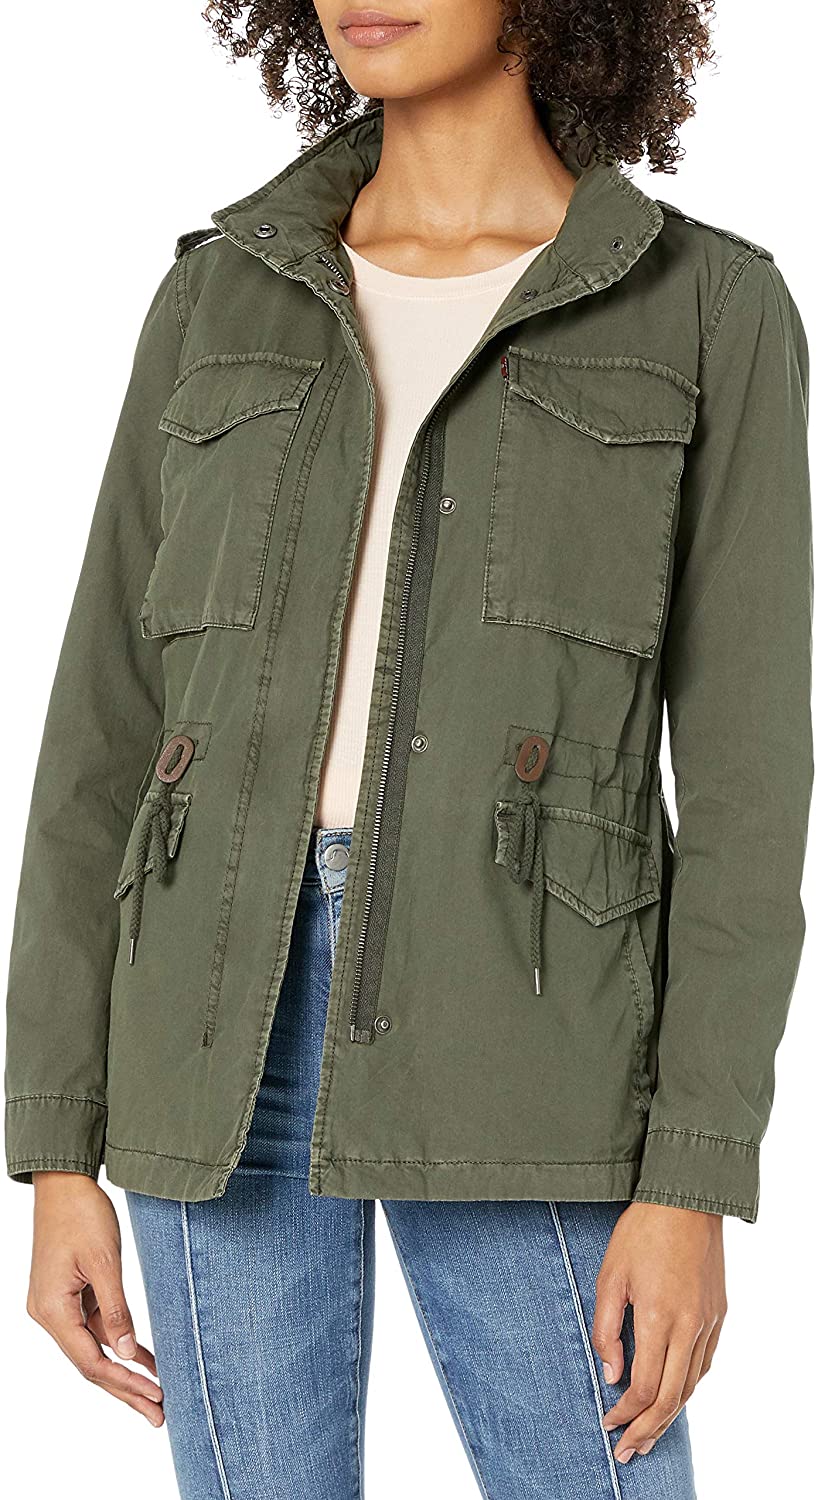 Levi's Women's Lightweight Parachute Cotton Military Jacket | eBay